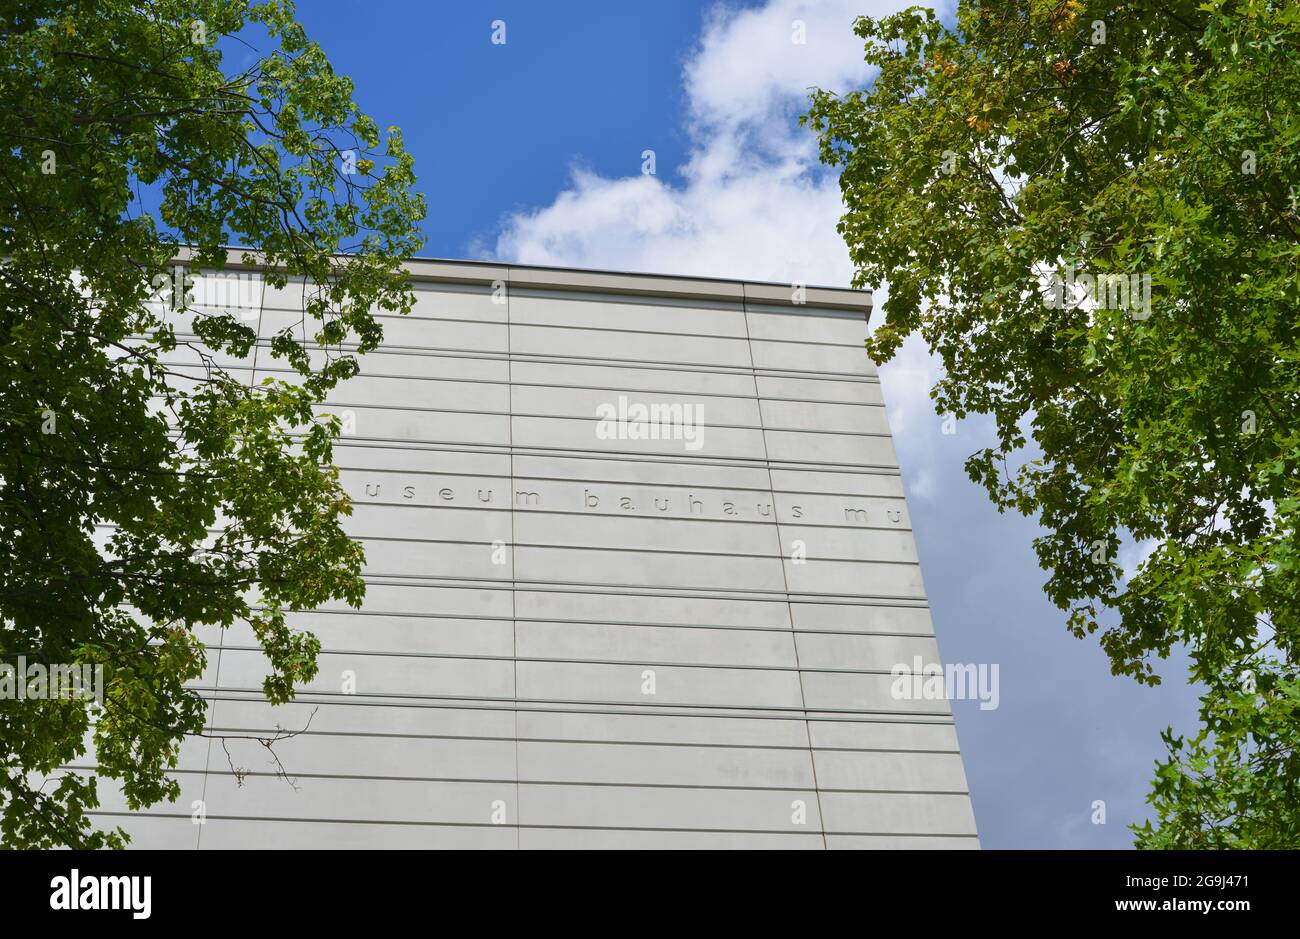 Weimar, Deutschland, Bauhaus Museumsarchitektur Inschrift an der modernen Fassade Stockfoto